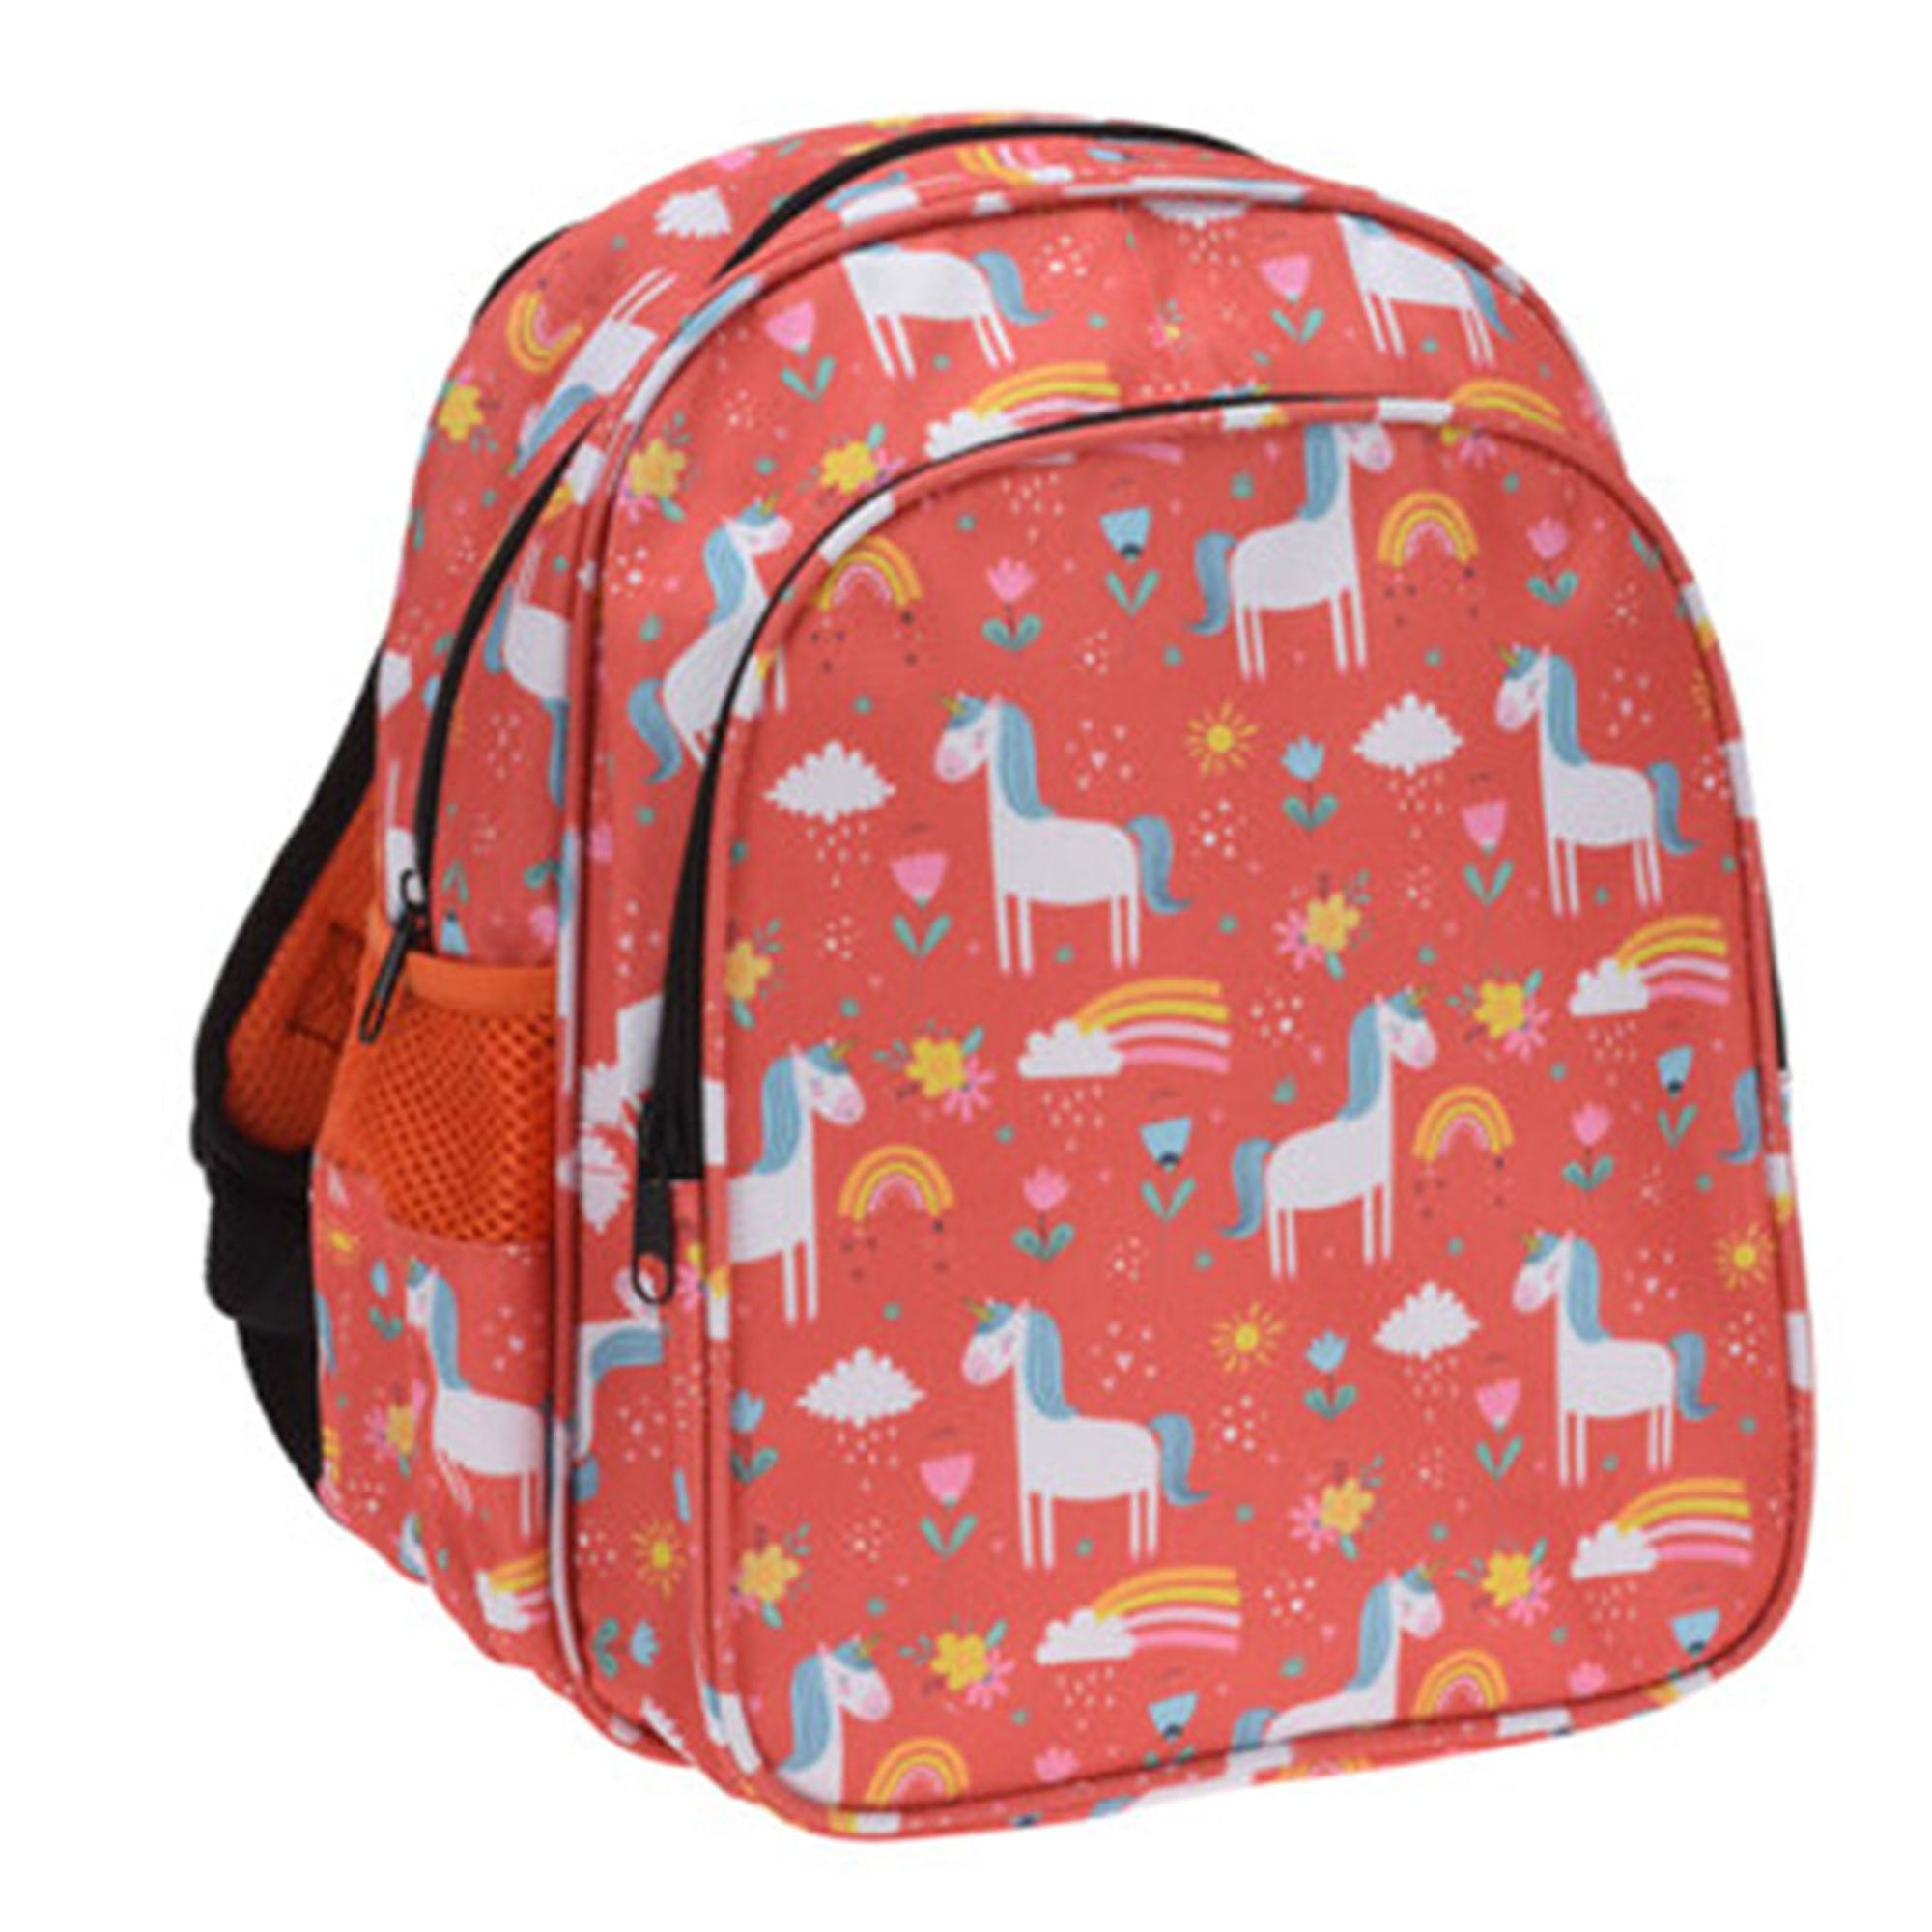 Diseño de mochila para niños - Diseño de unicornio